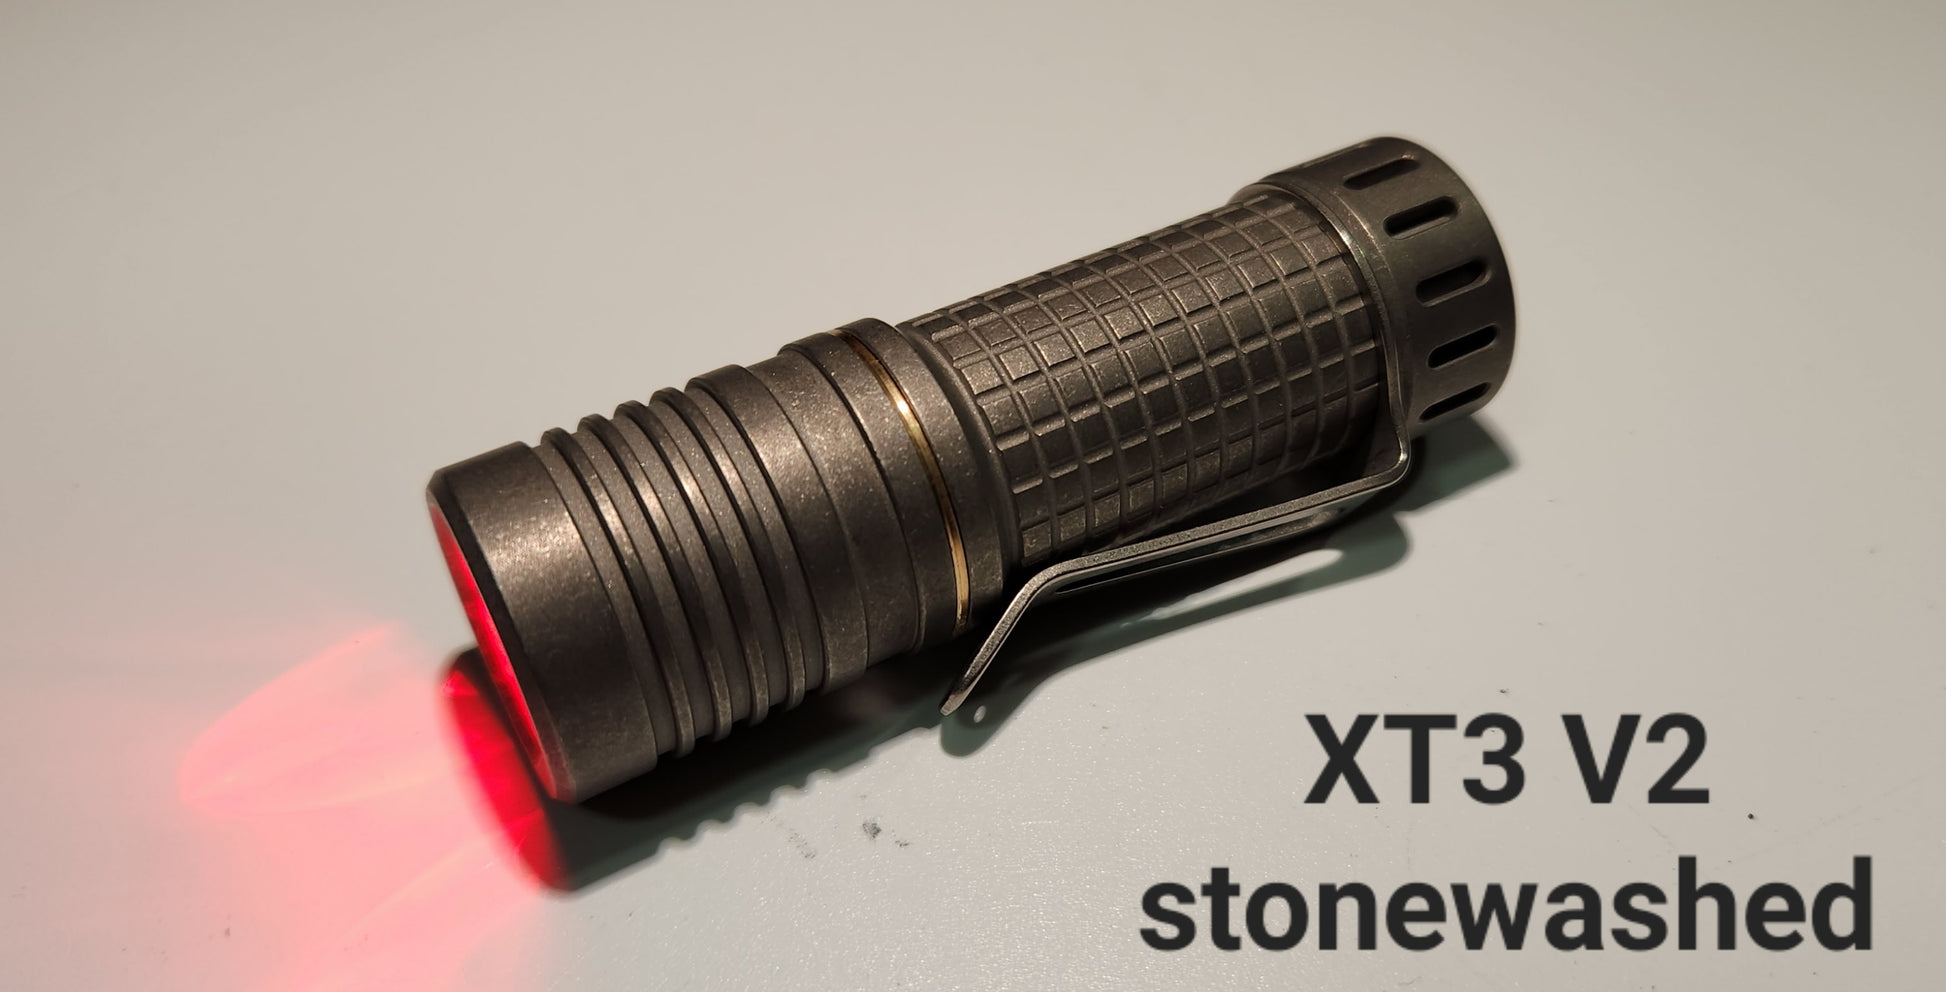 Maeerxu XT3 V2 Titanium 18350 3000LM EDC LED Flashlight XT3 V2 STONEWASHED TITANIUM NICHIA 519A 5700K DOMED